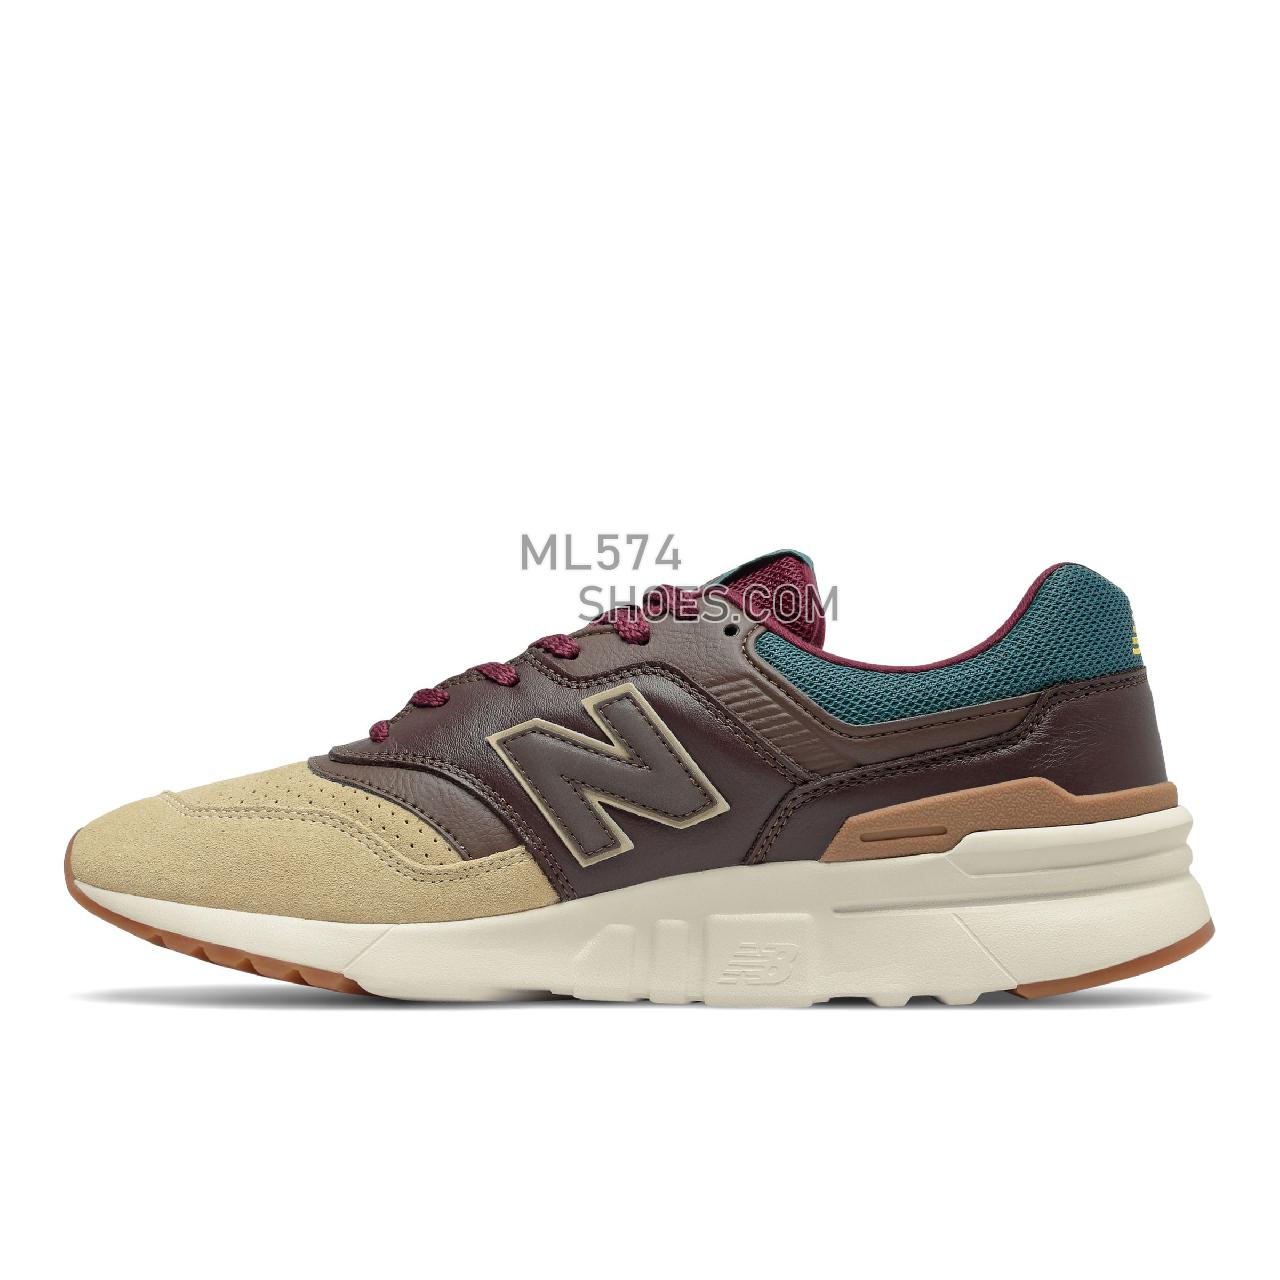 New Balance 997H - Men's Classic Sneakers - Brown with Tan - CM997HWE